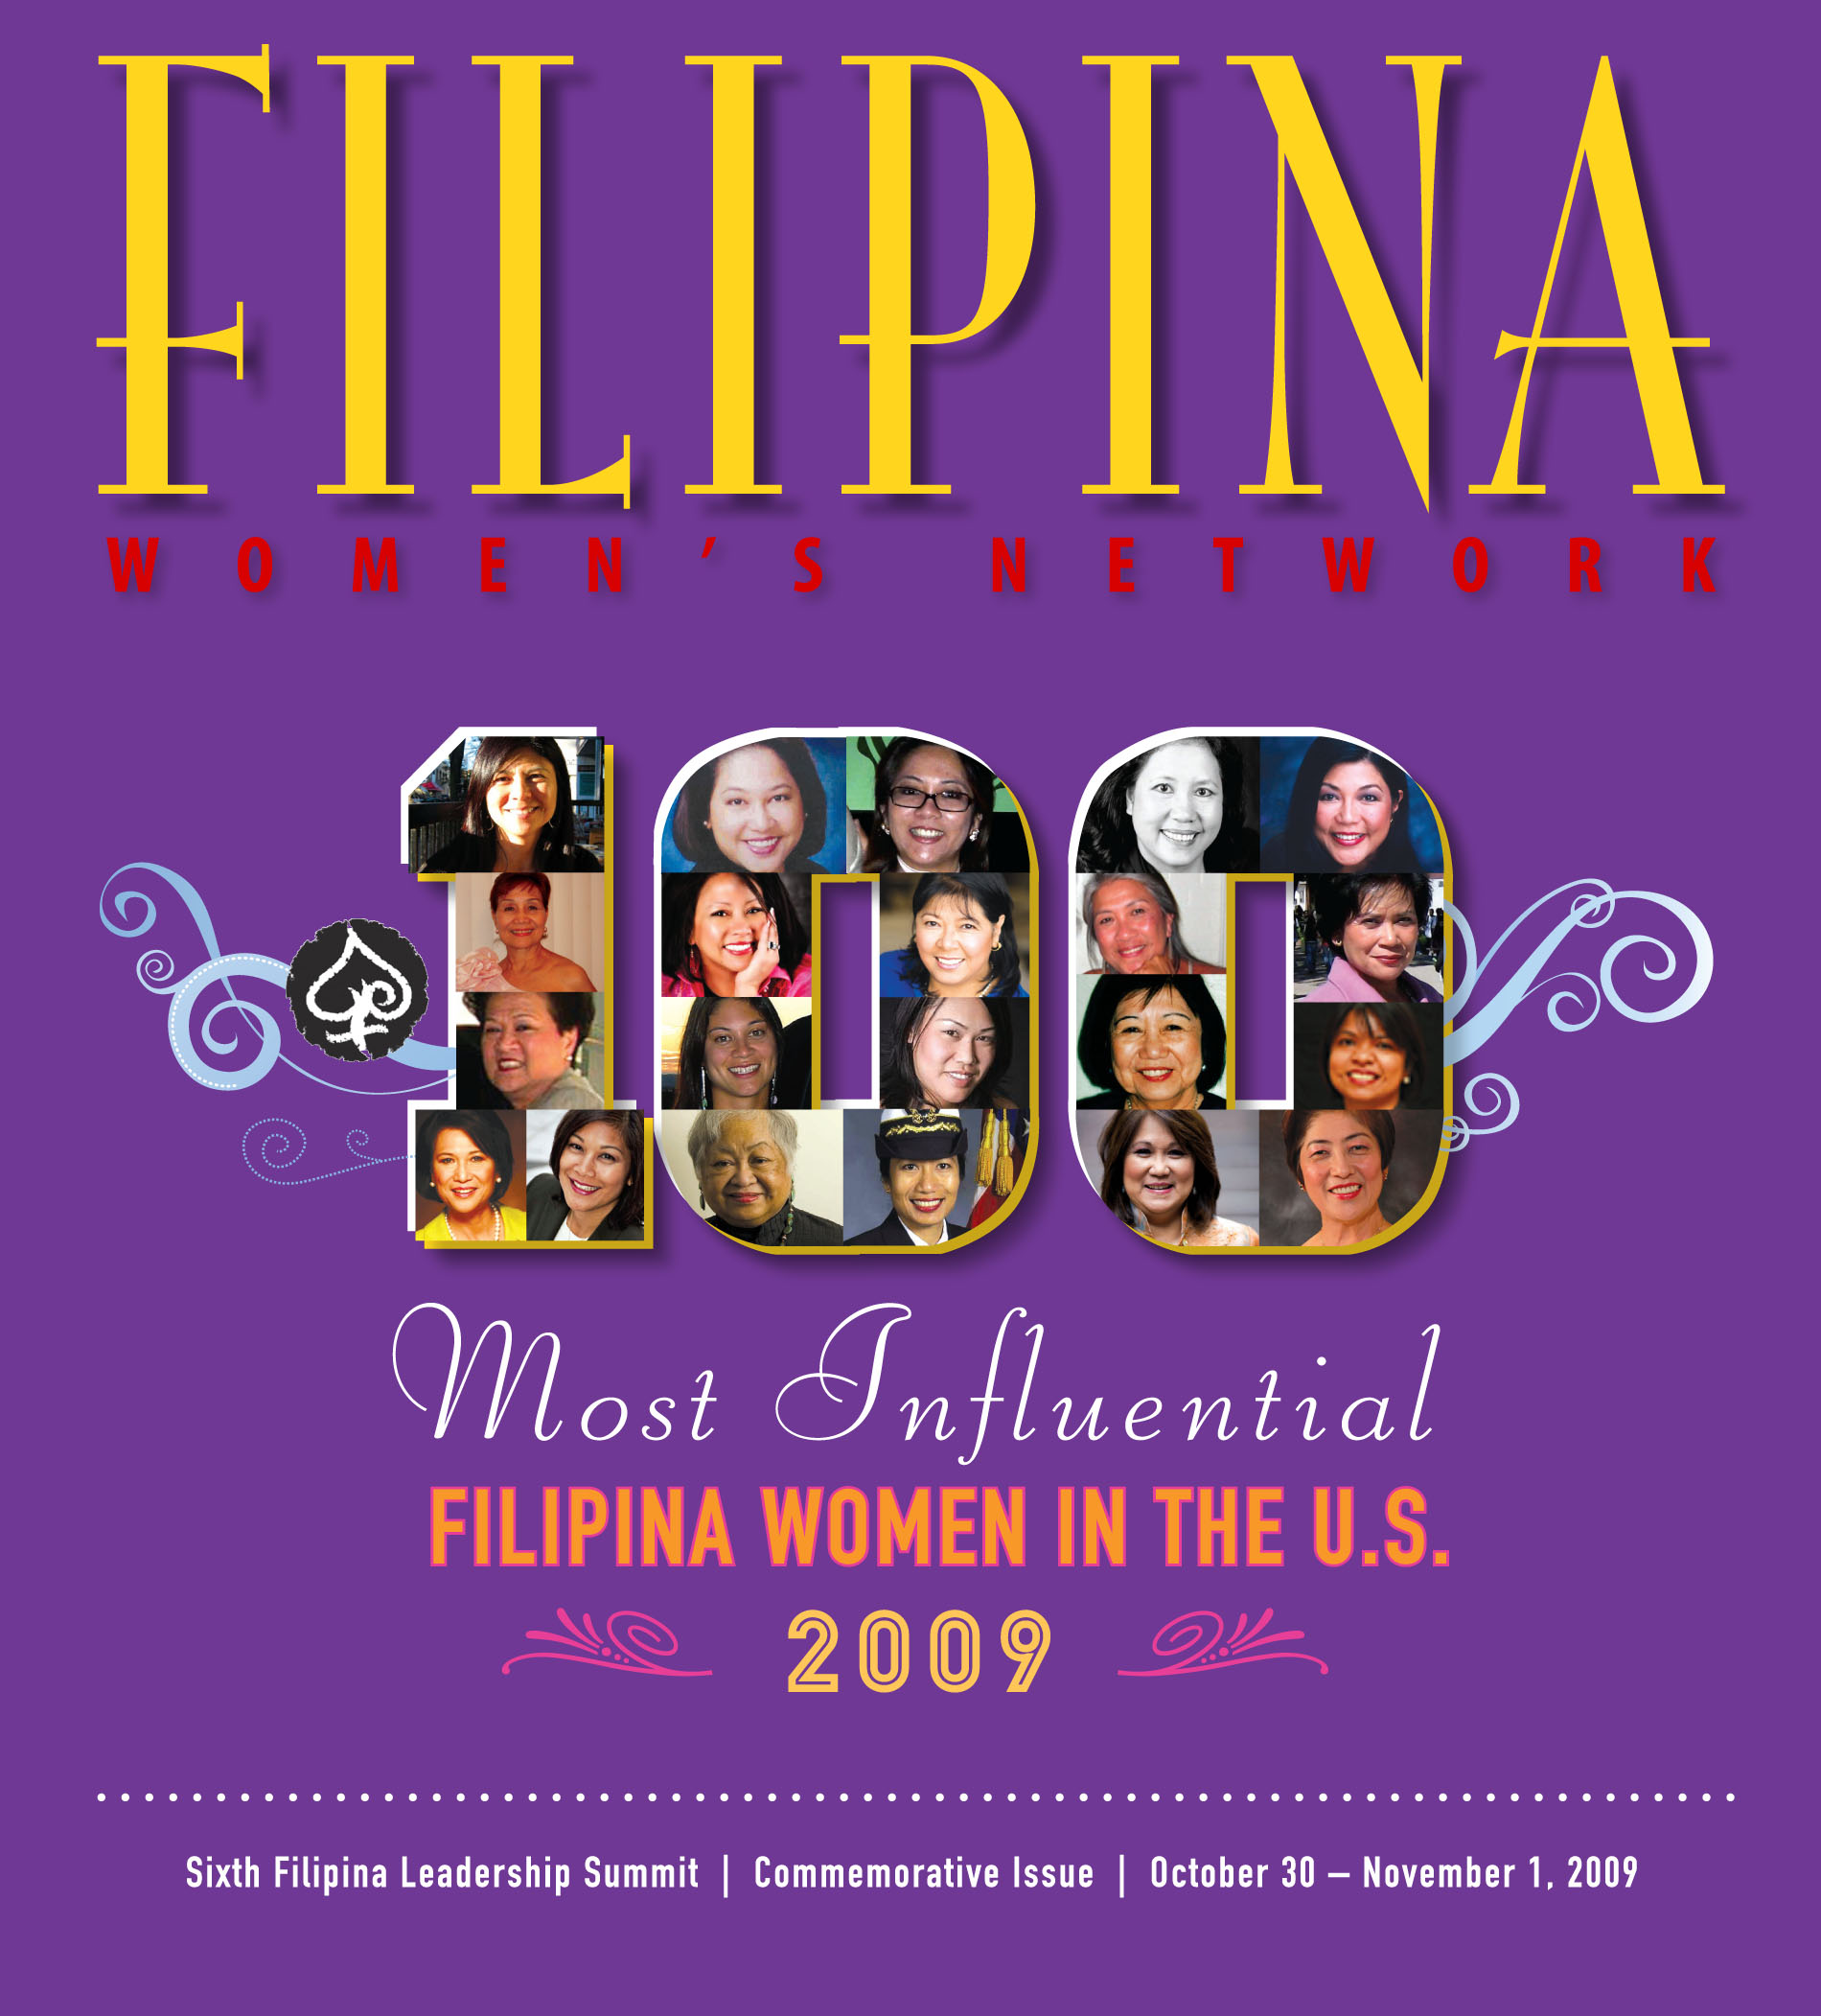 100 Most Influential Filipina Women in the U.S. (2009)